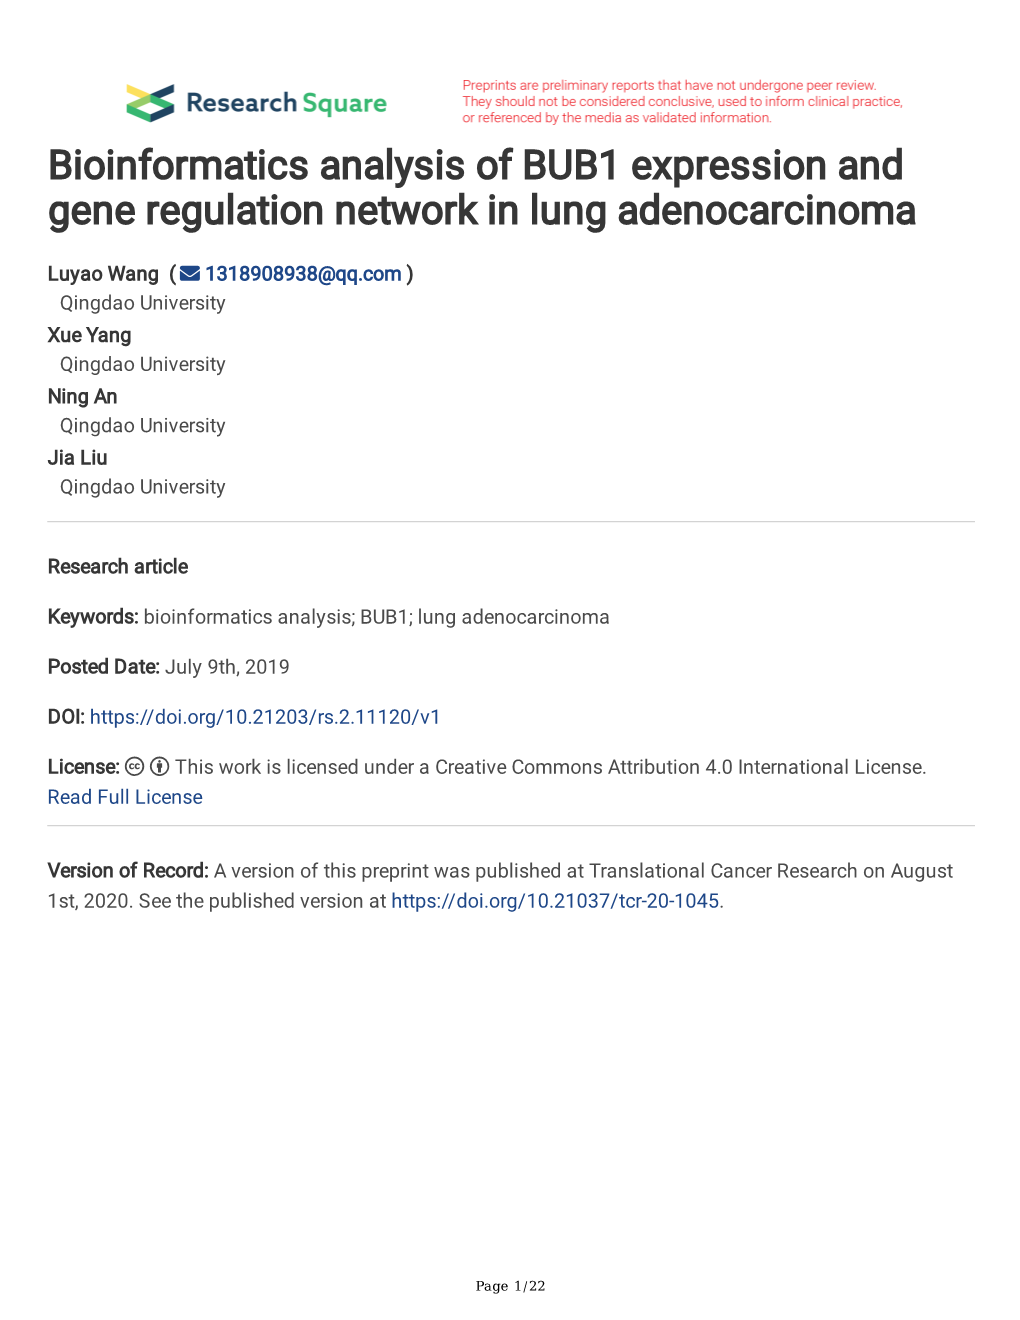 Bioinformatics Analysis of BUB1 Expression and Gene Regulation Network in Lung Adenocarcinoma